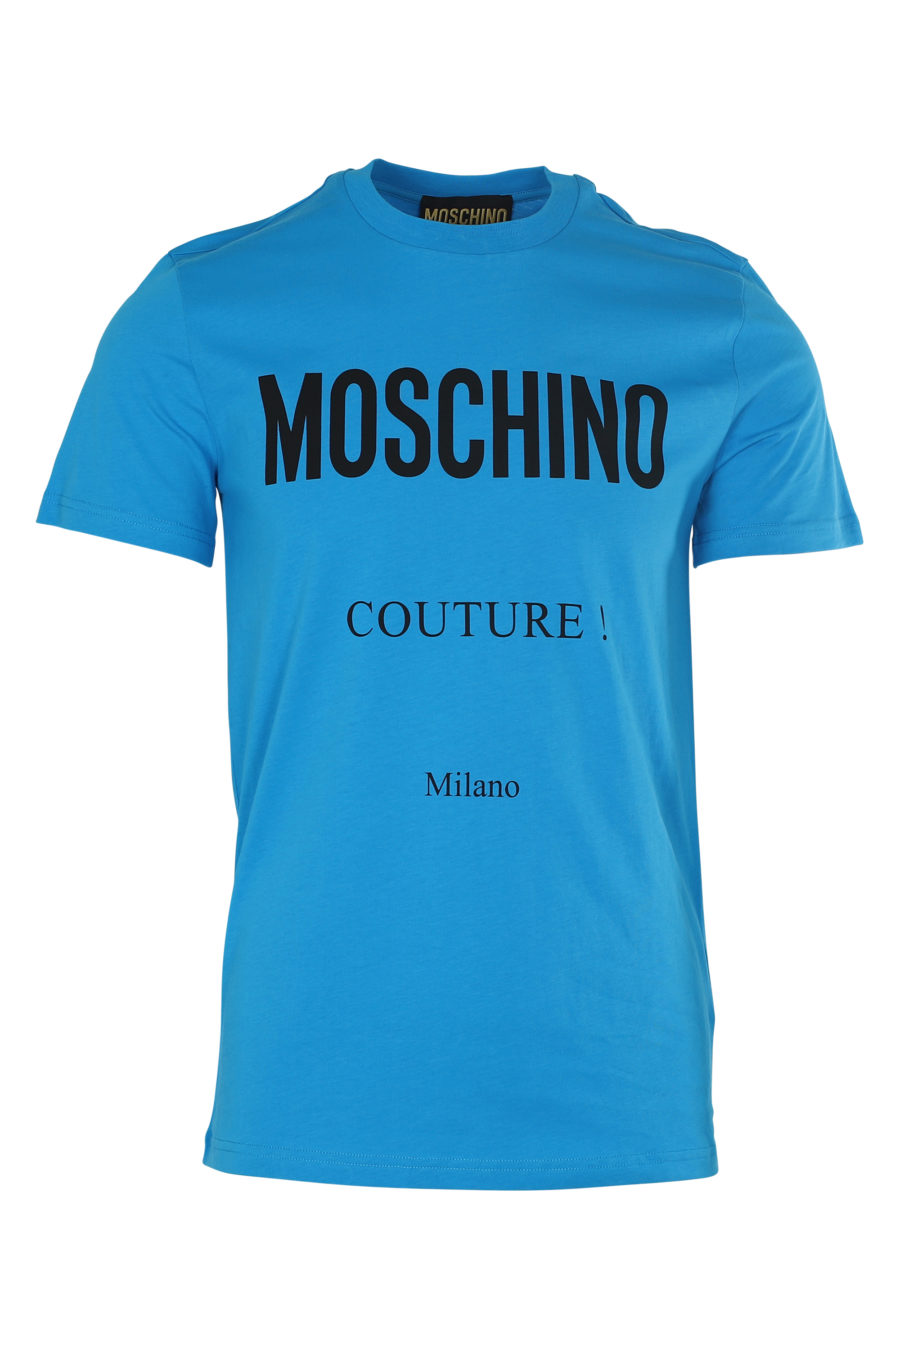 Camiseta azul con logo "Couture" - IMG 6112